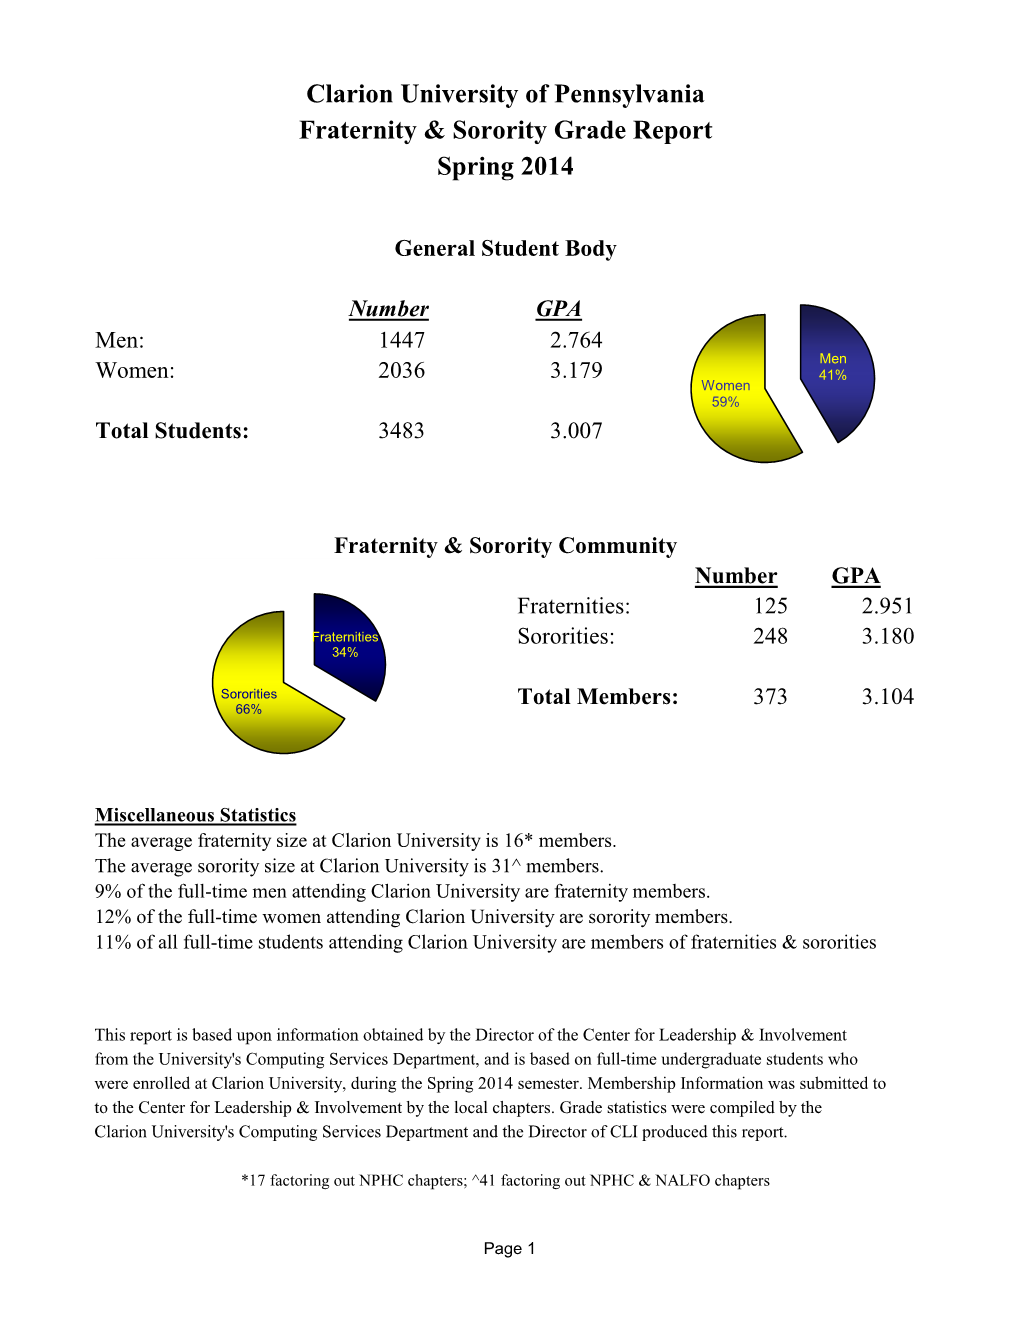 Clarion University of Pennsylvania Fraternity & Sorority Grade Report